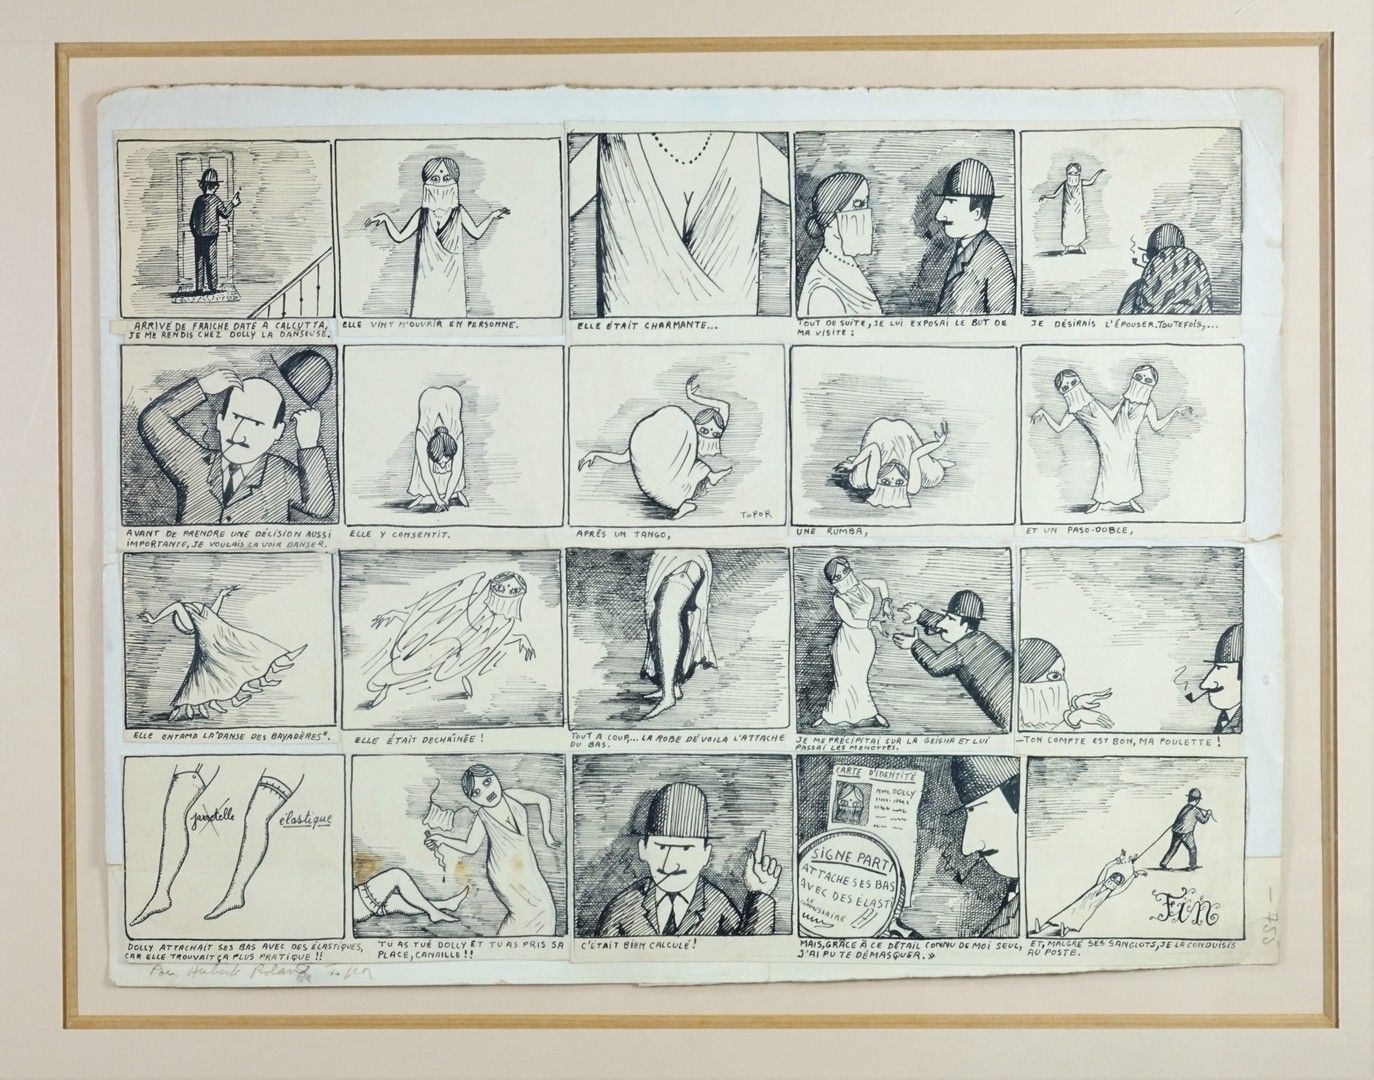 Roland TOPOR (1938-1997) "加尔各答的舞者"，1965年
粘贴在纸板上的纸上墨水
底部有签名和说明
28 x 37,5 cm 该主题

&hellip;